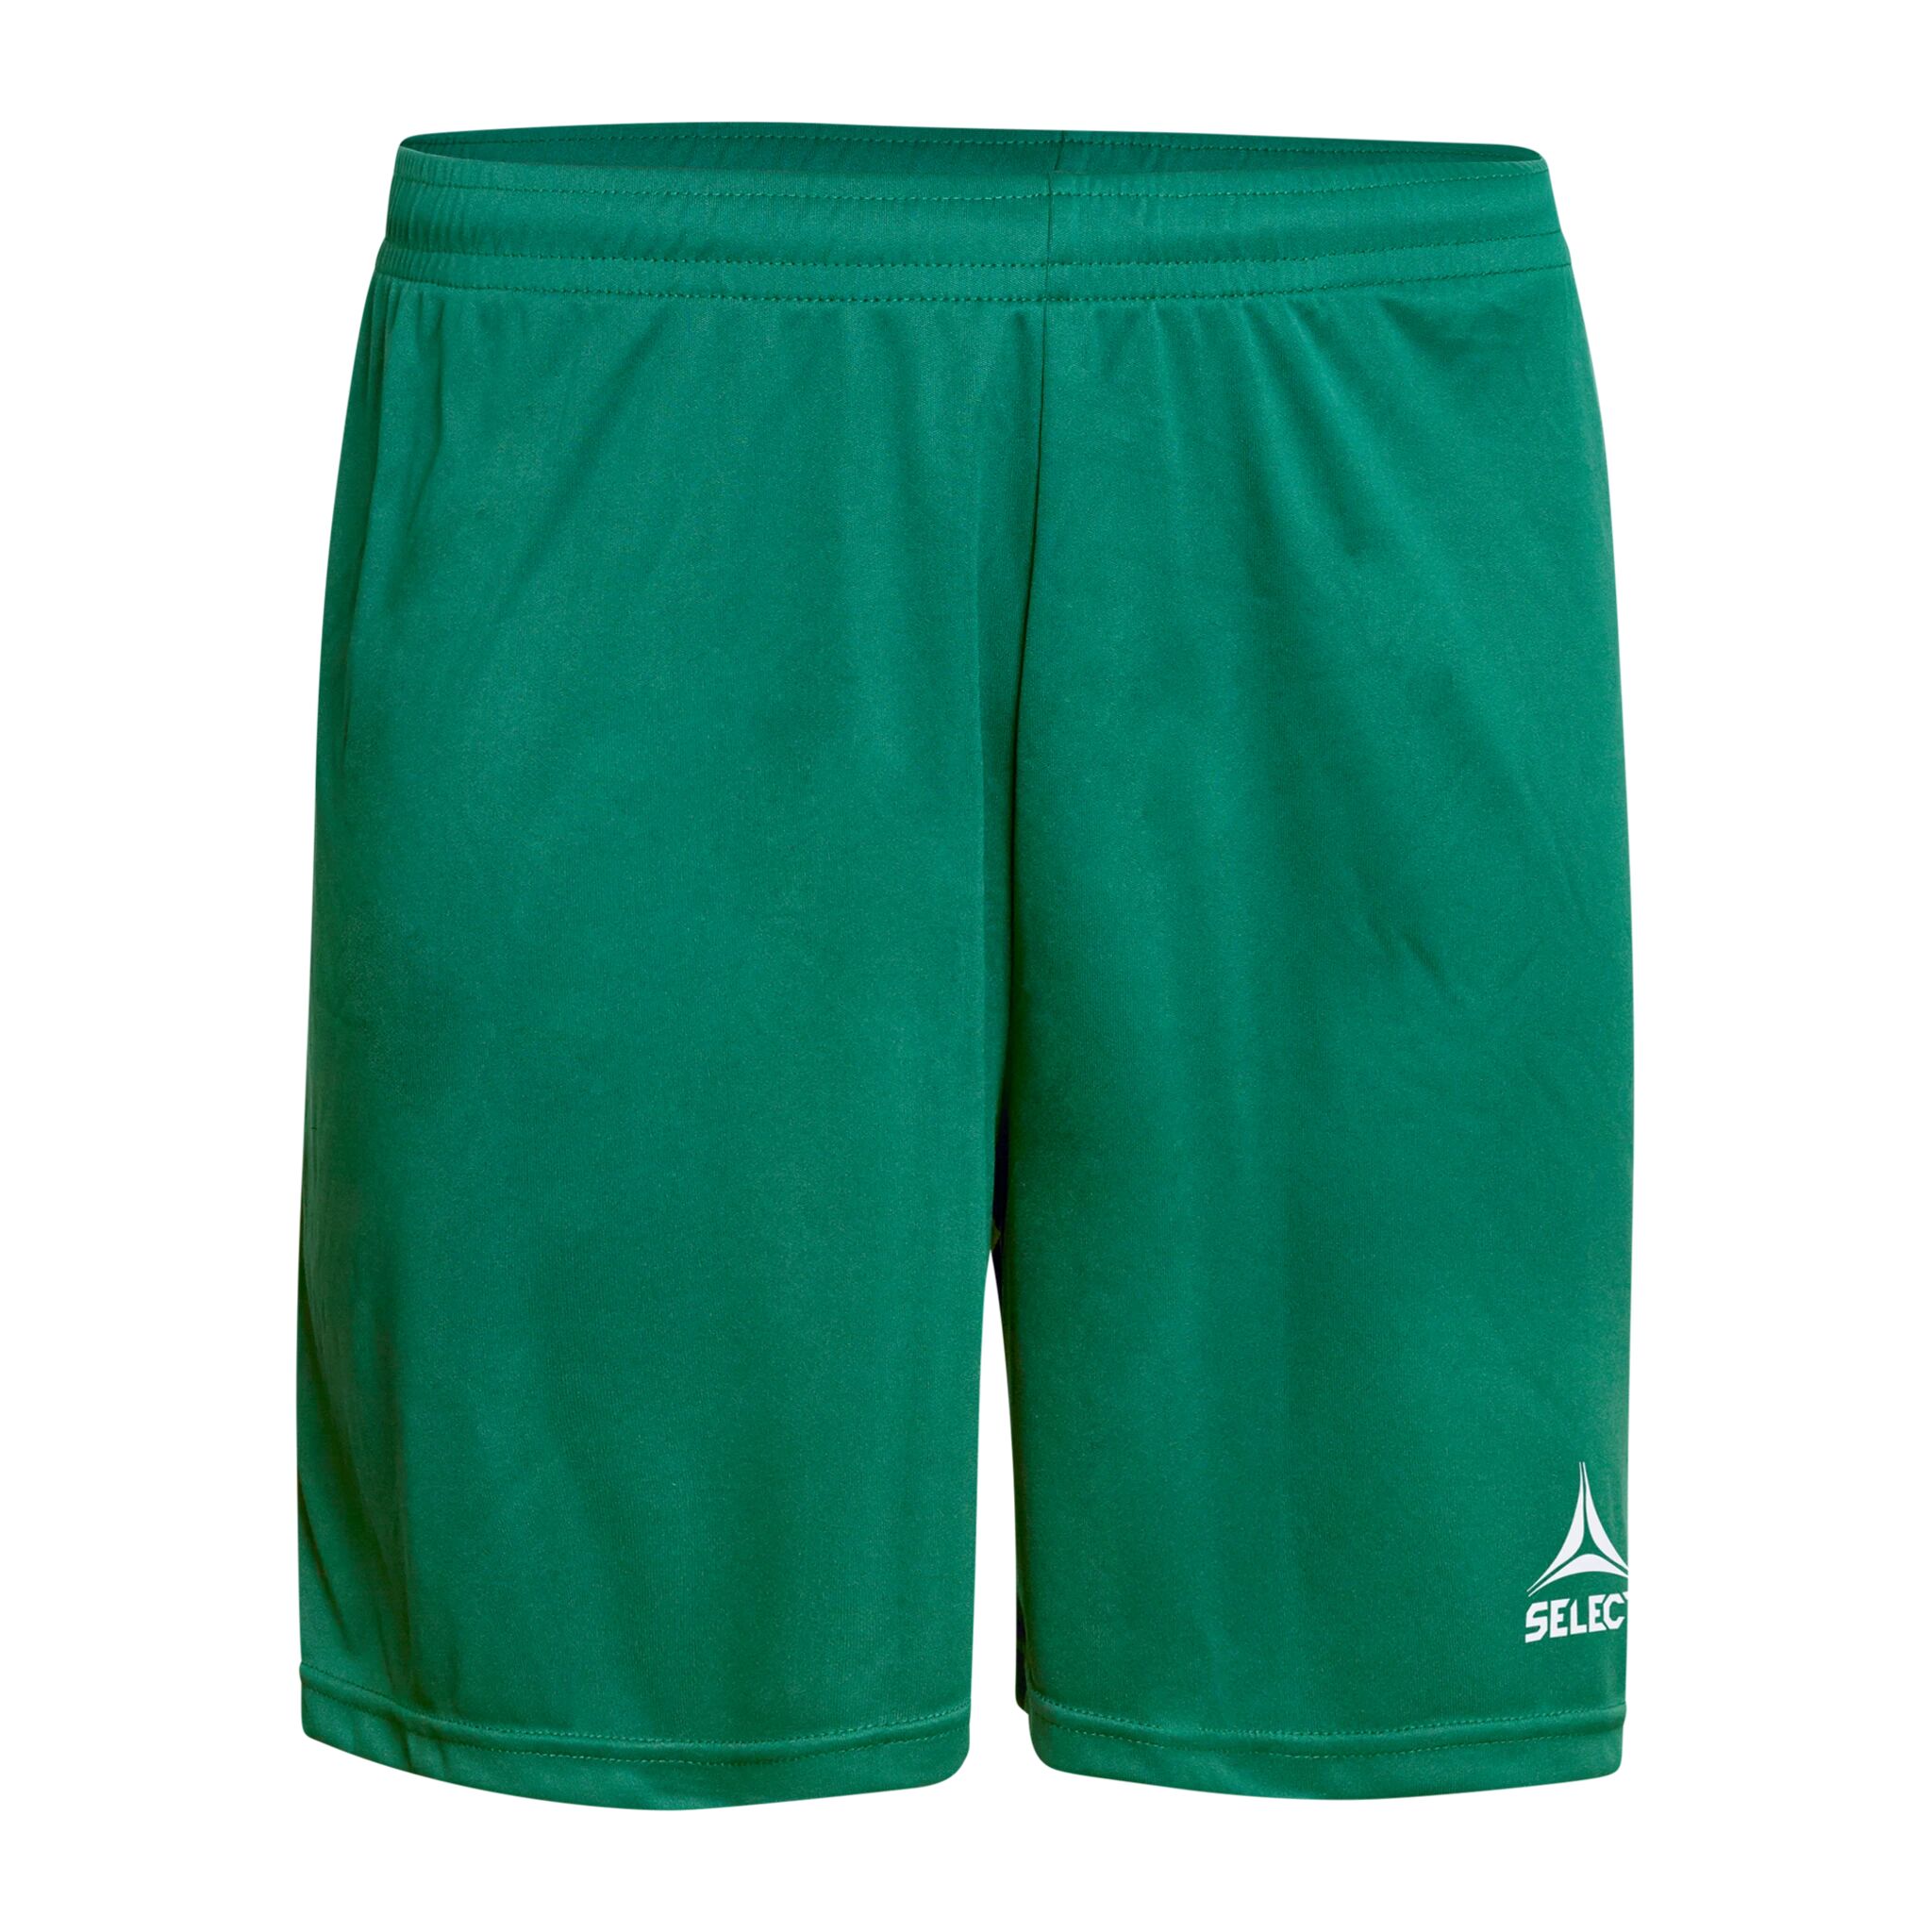 Select Player shorts Pisa, shorts senior XXL Green